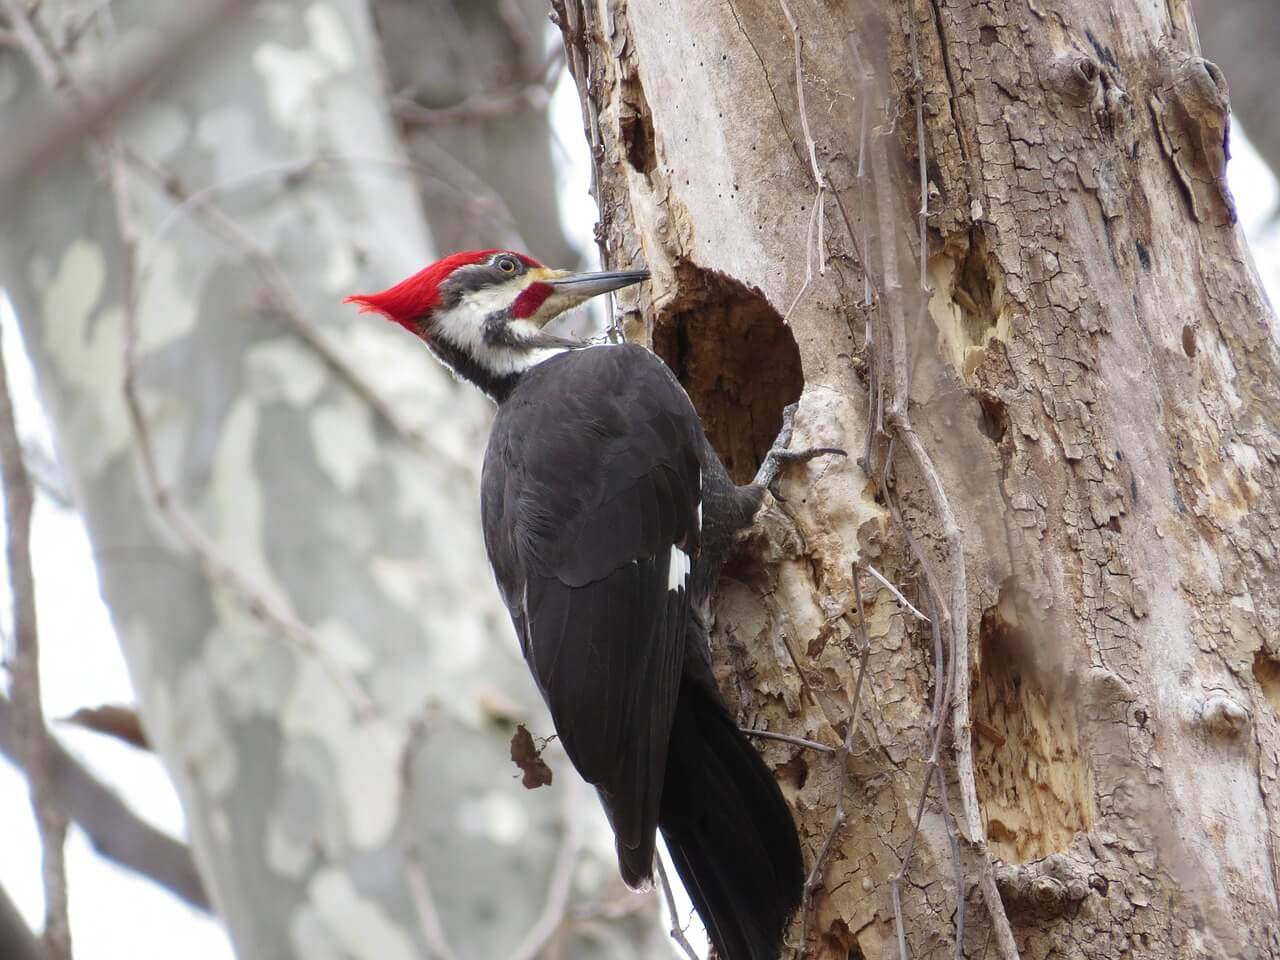 https://pixabay.com/en/pileated-woodpecker-bird-tree-807556/